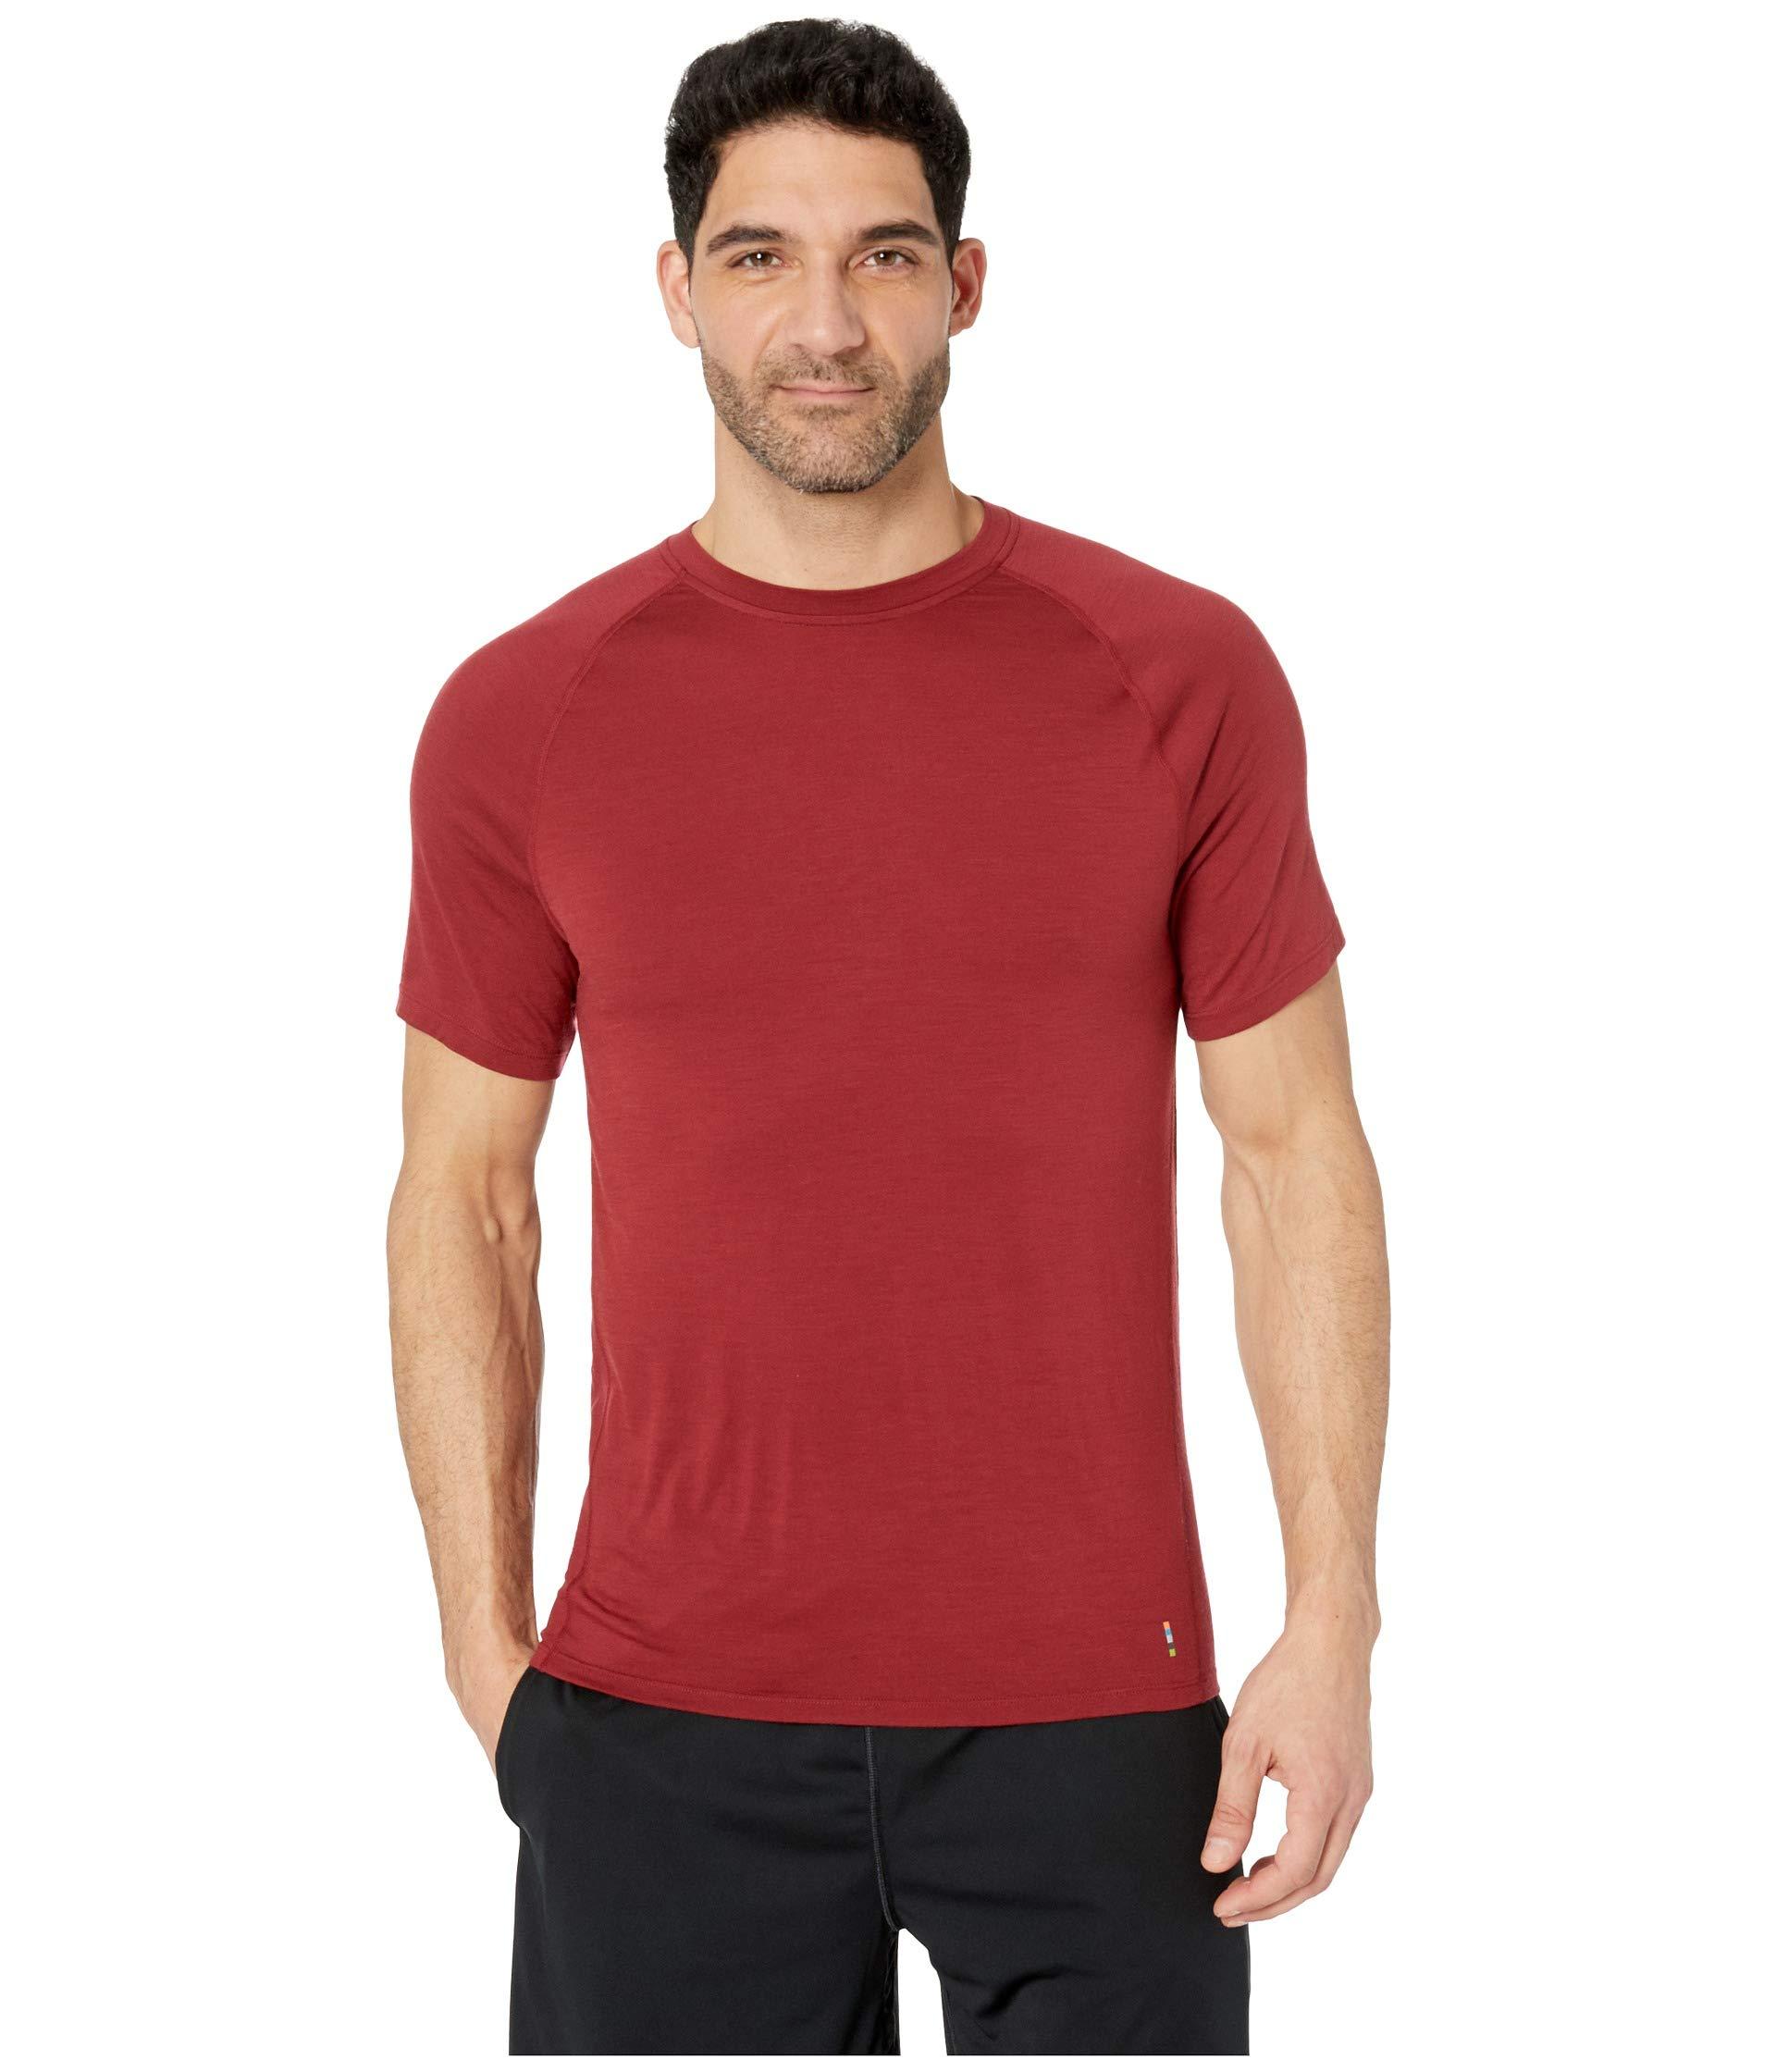 Smartwool Wool Merino 150 Baselayer Short Sleeve in Red for Men - Lyst